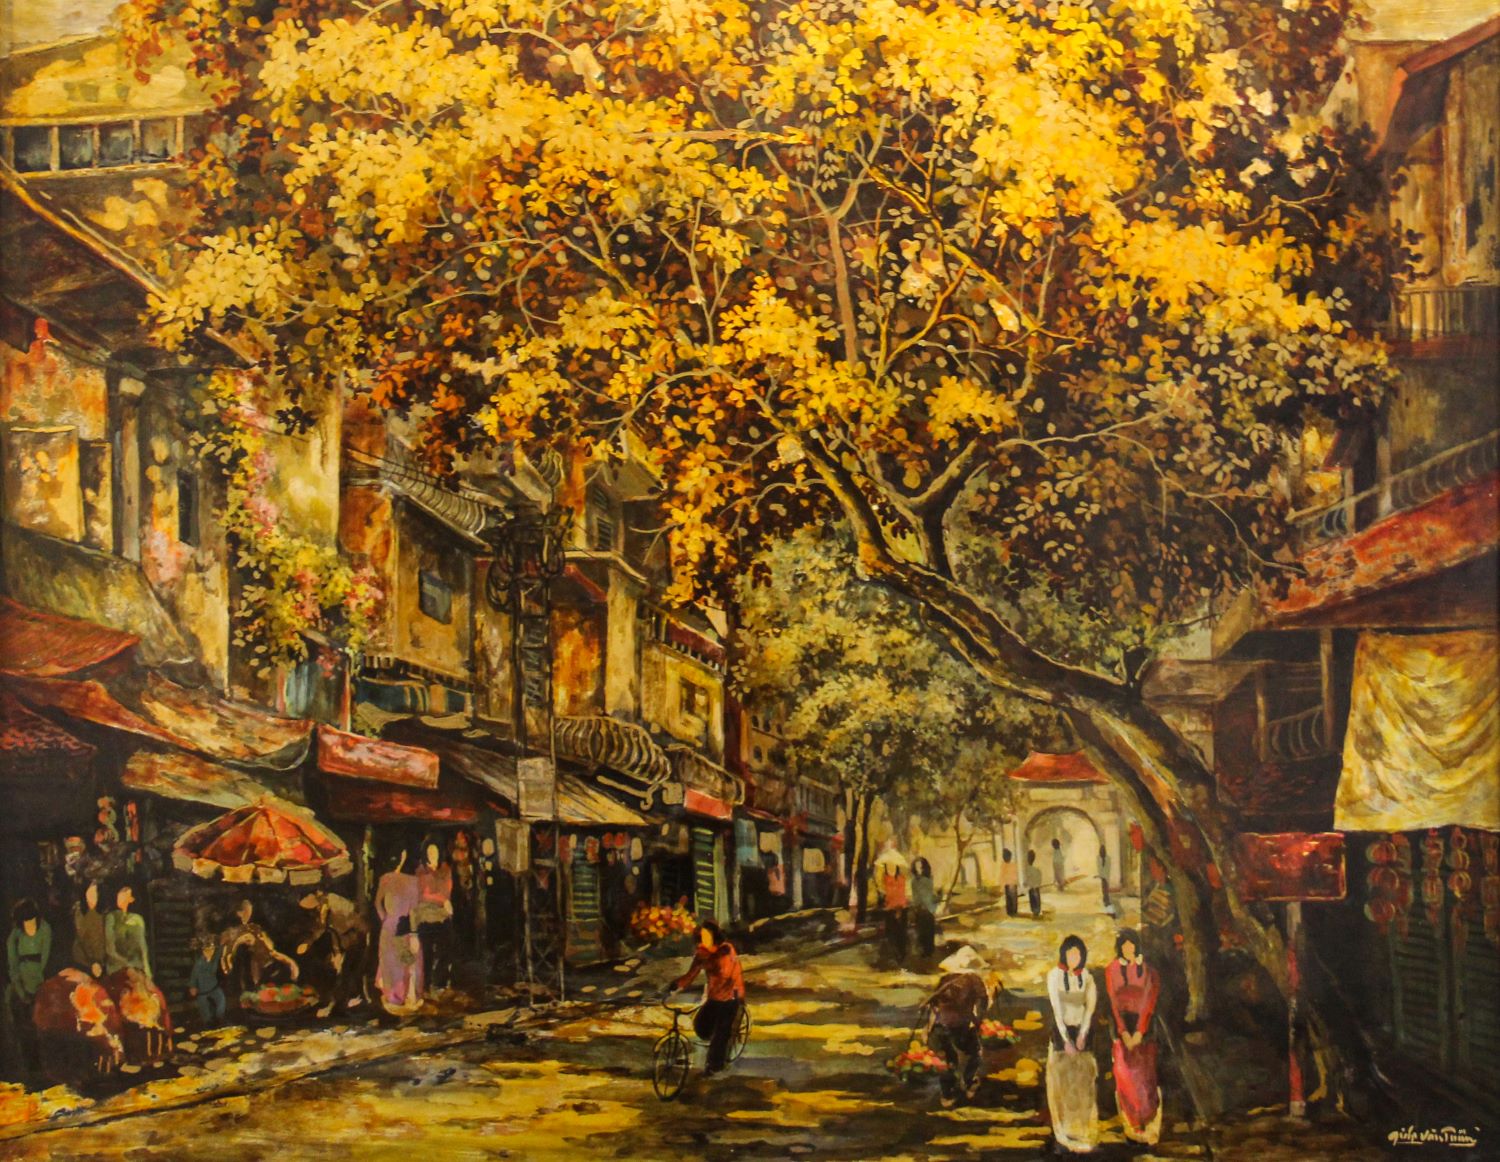 Golden Sunlight on Street IV - Vietnamese Lacquer Painting by Artist Giap Van Tuan